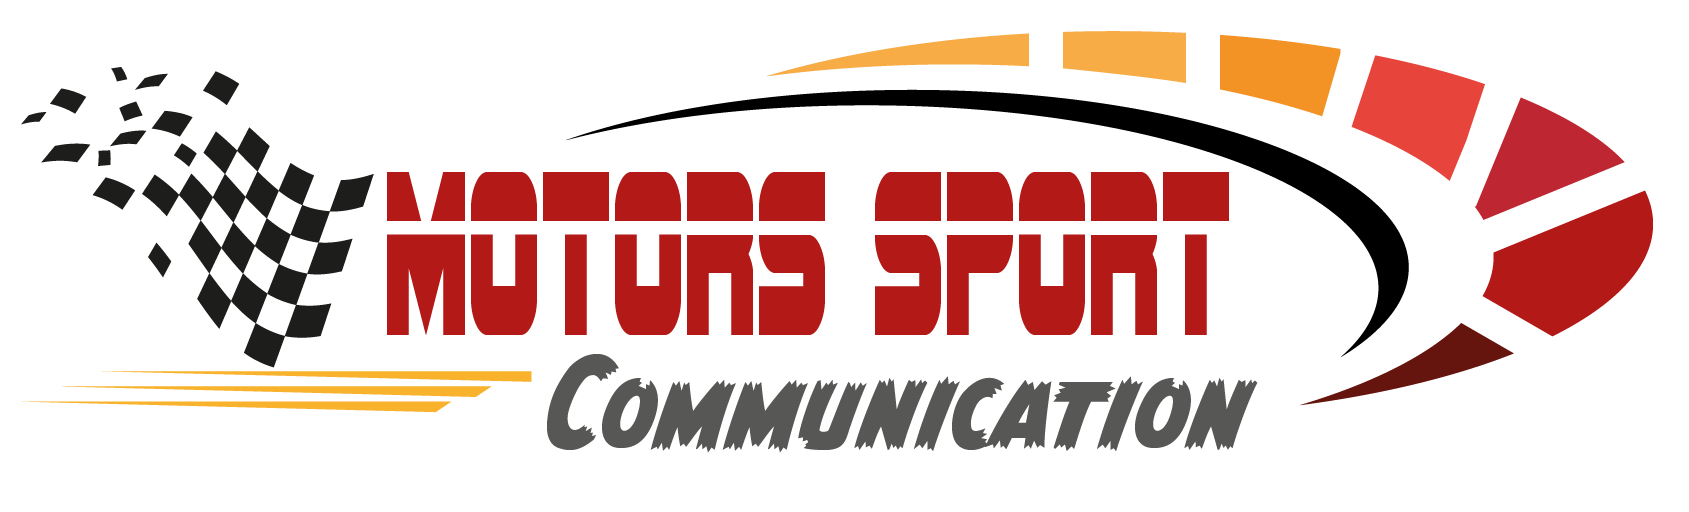 Motors Sport Communication